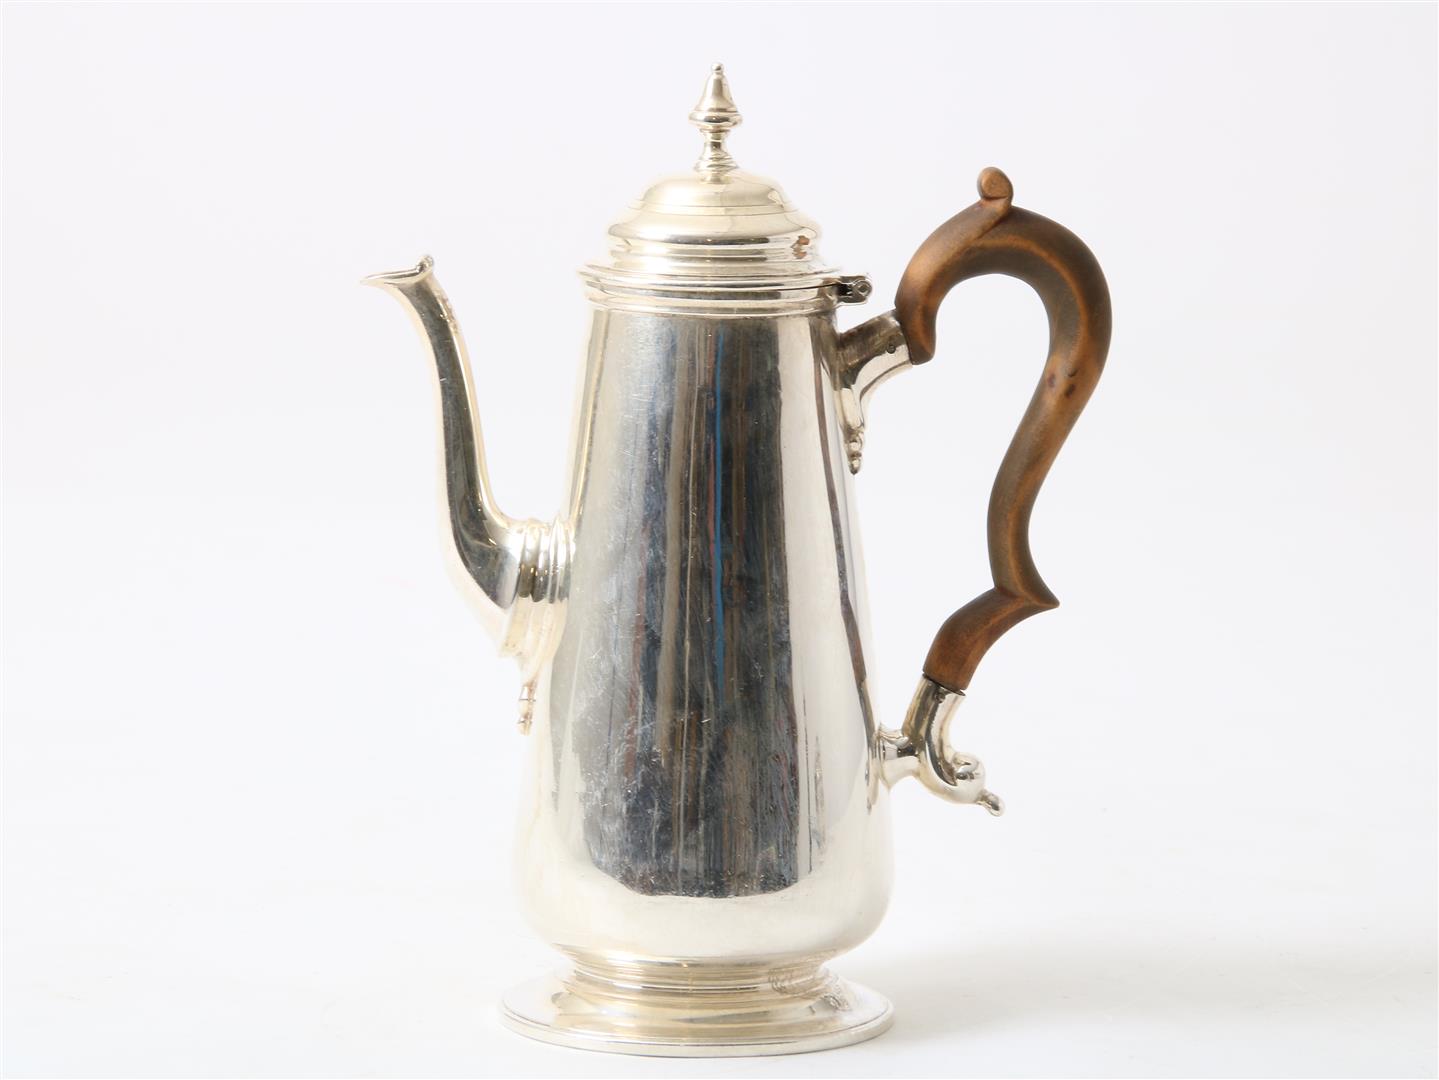 Silver Victorian coffee pot, year 1893, with crest 'omi leberMetu' London, England, grade 925/000,